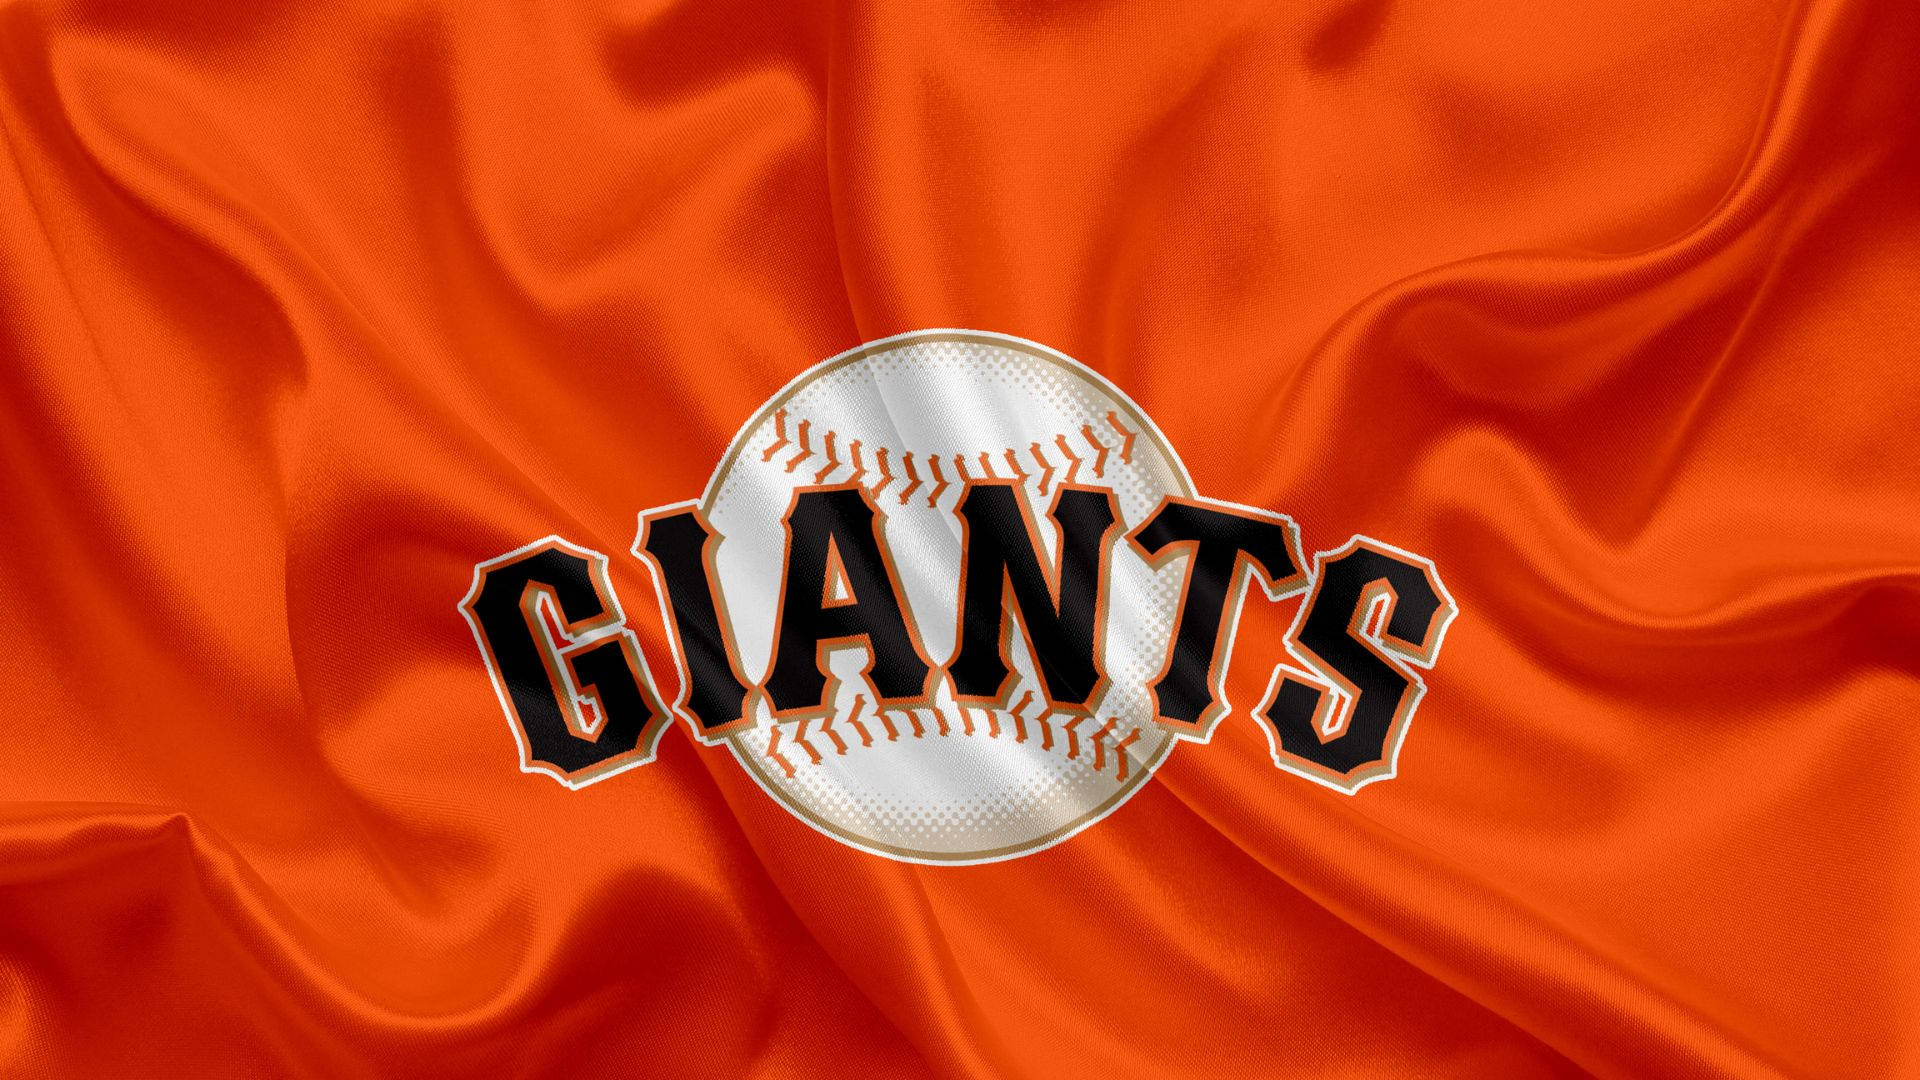 San Francisco Giants Logo On Cloth Background